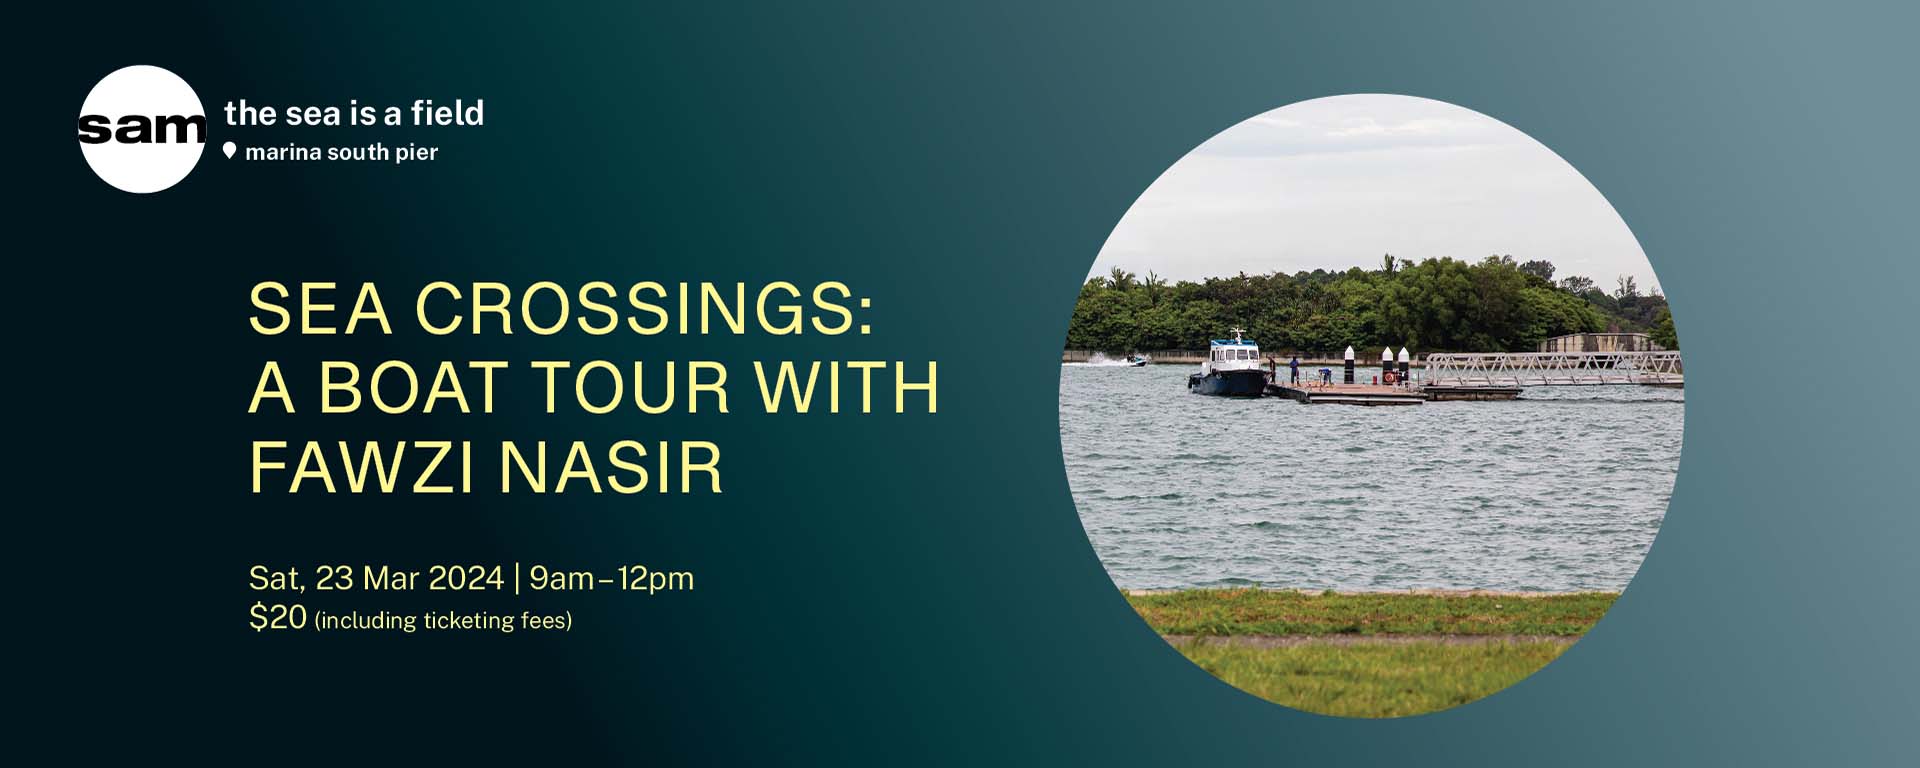 Sea Crossings: A Boat Tour with Fawzi Nasir